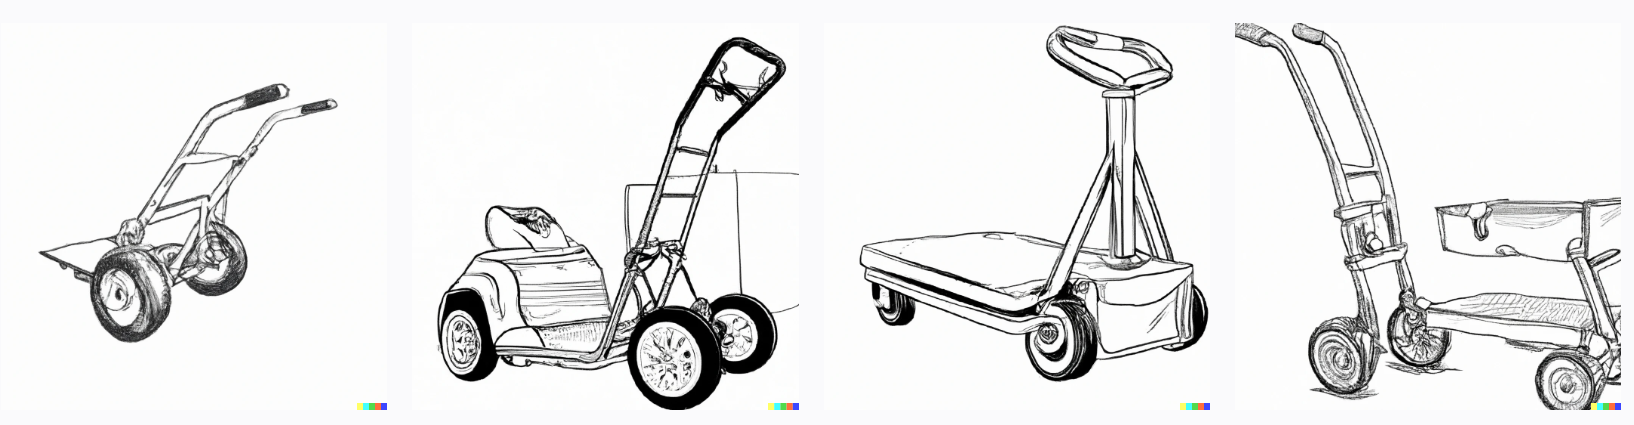 Small wheeled transporter sketch design